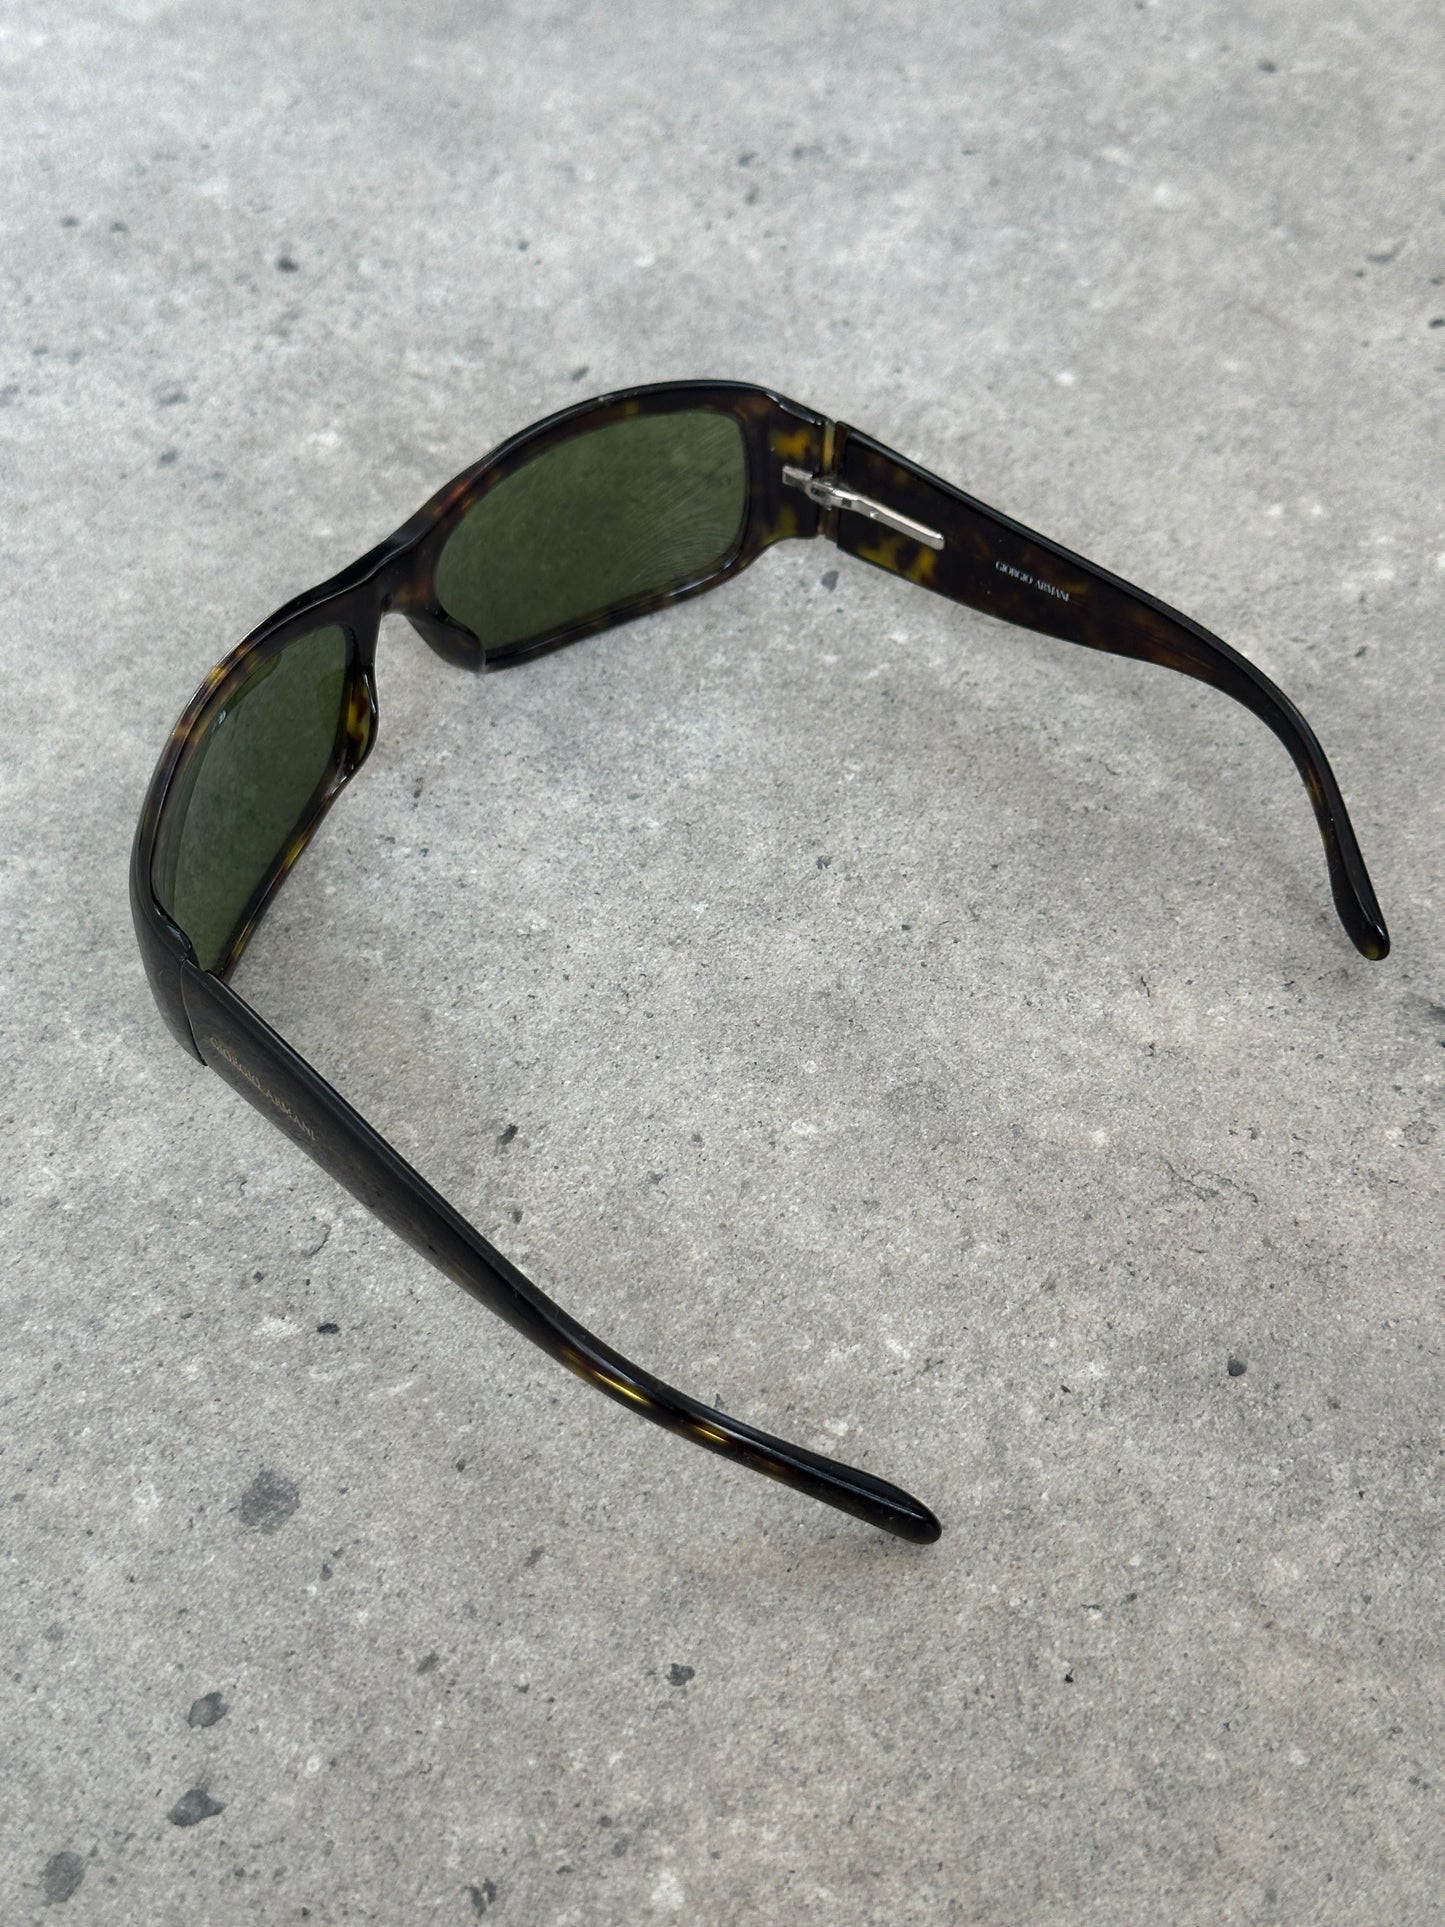 Giorgio Armani Tortoiseshell Rectangle Sunglasses